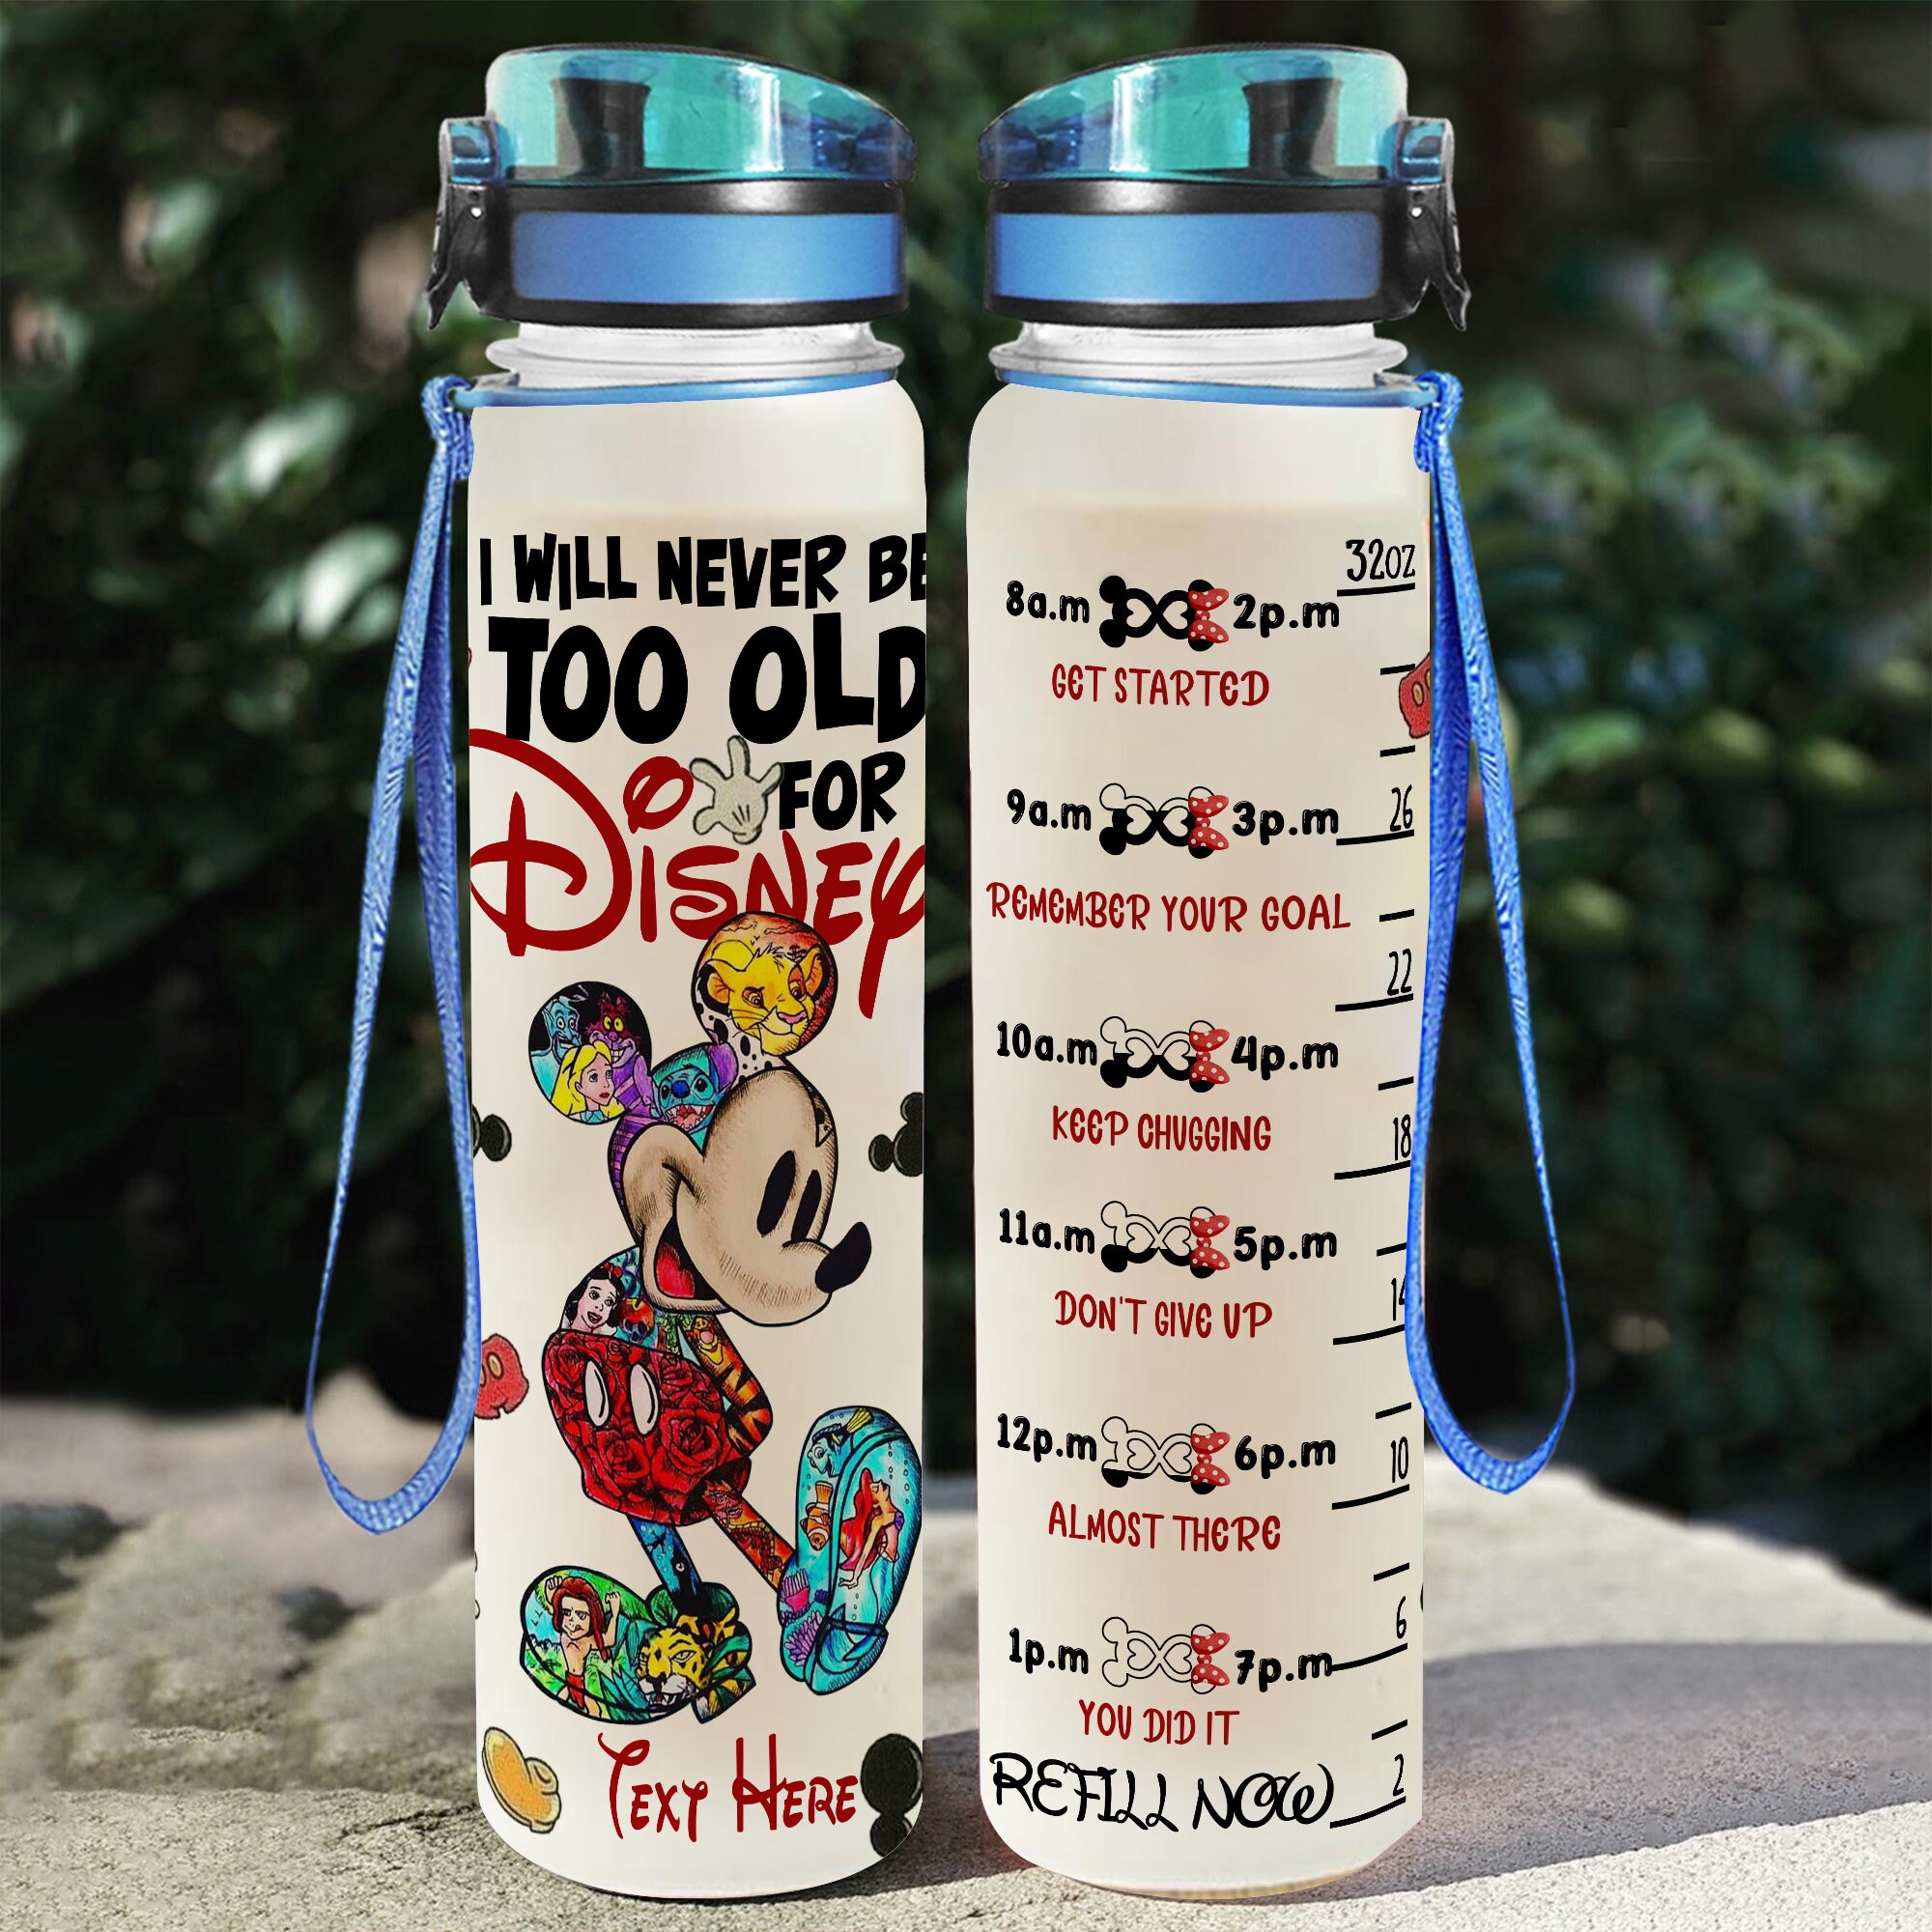 Disney vinyl transfer monogrammed water bottles with Cricut.